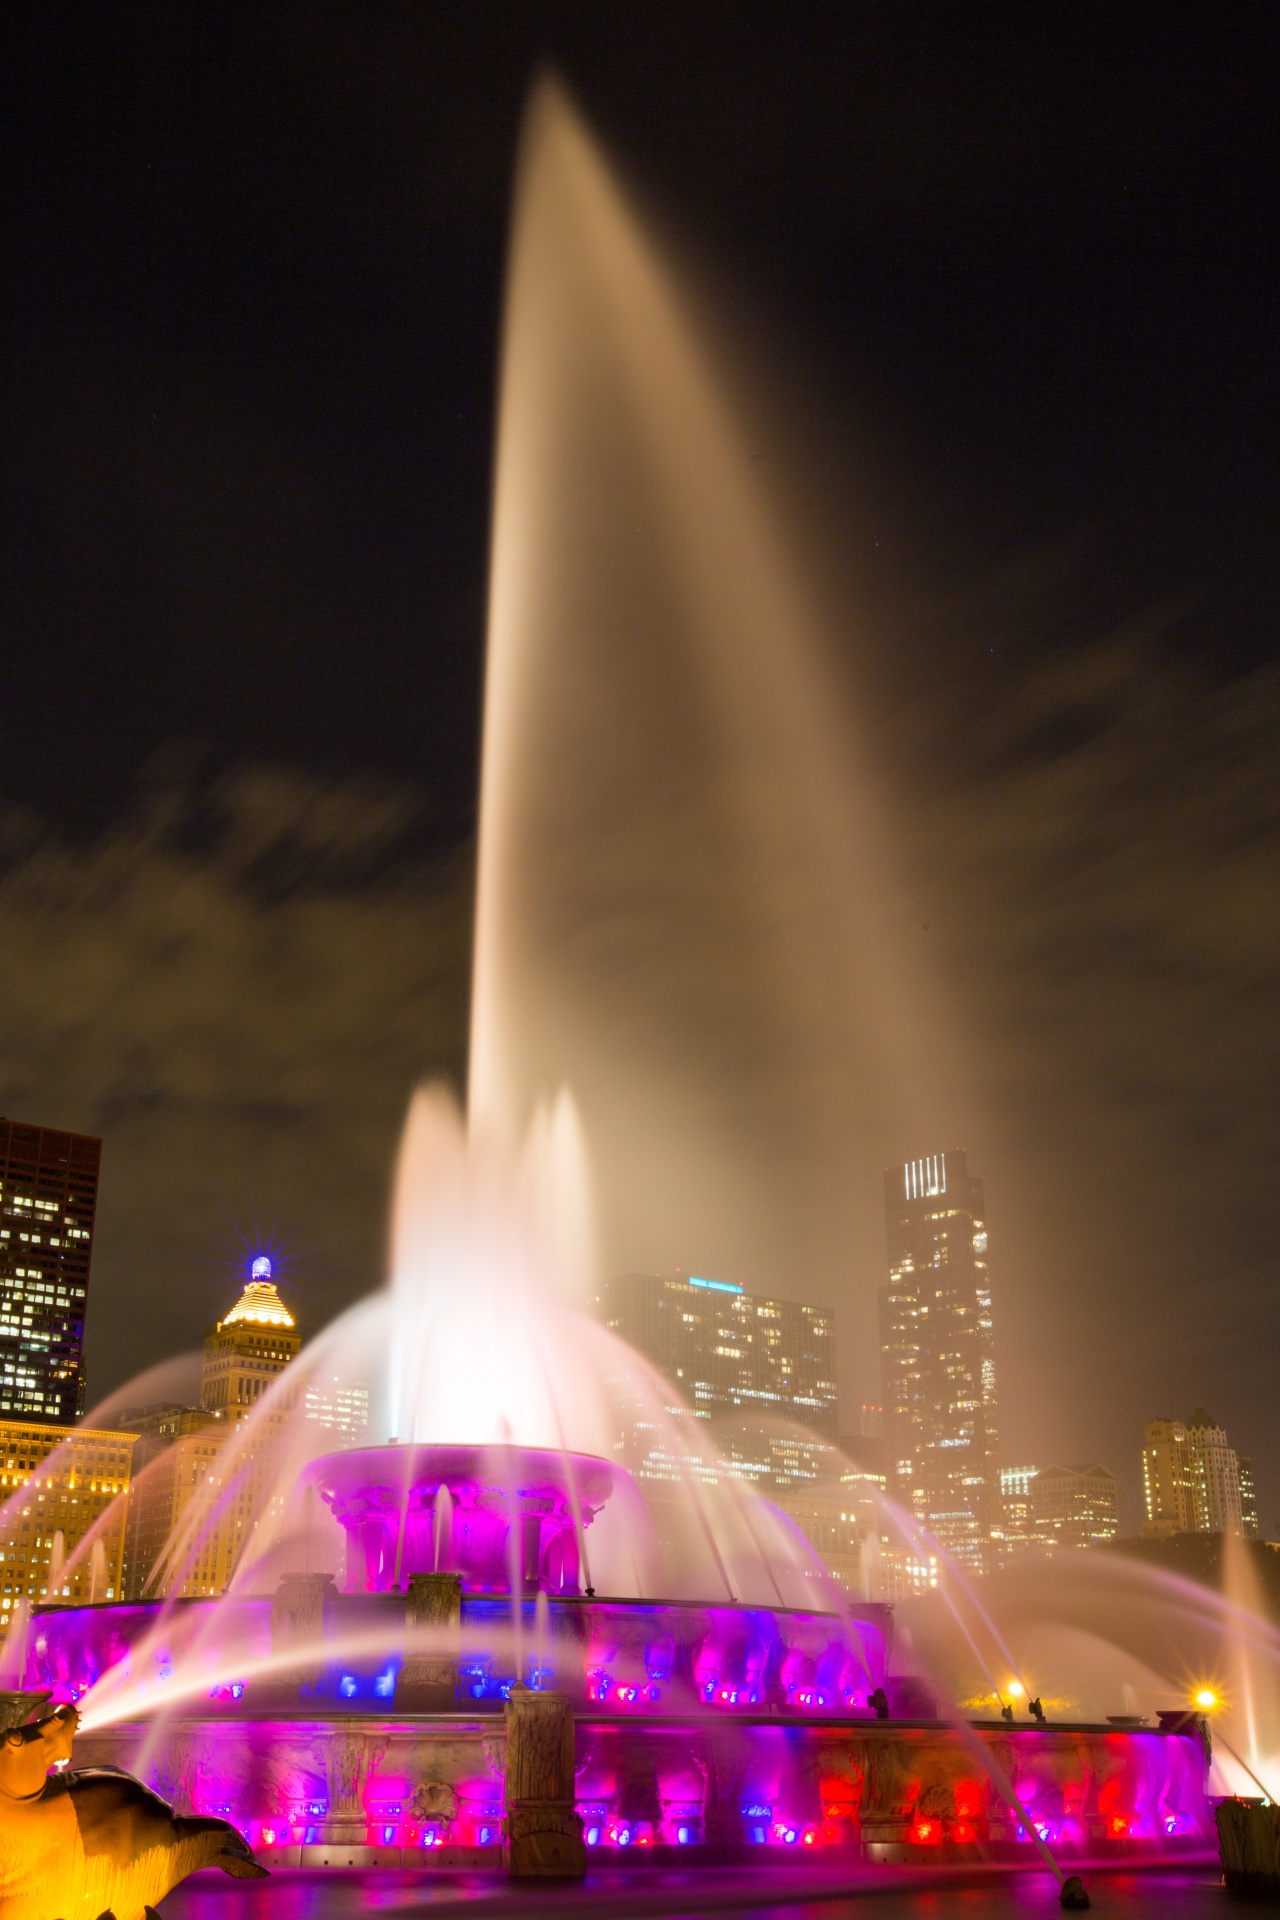 Buckingham Fountain in Chicago at night